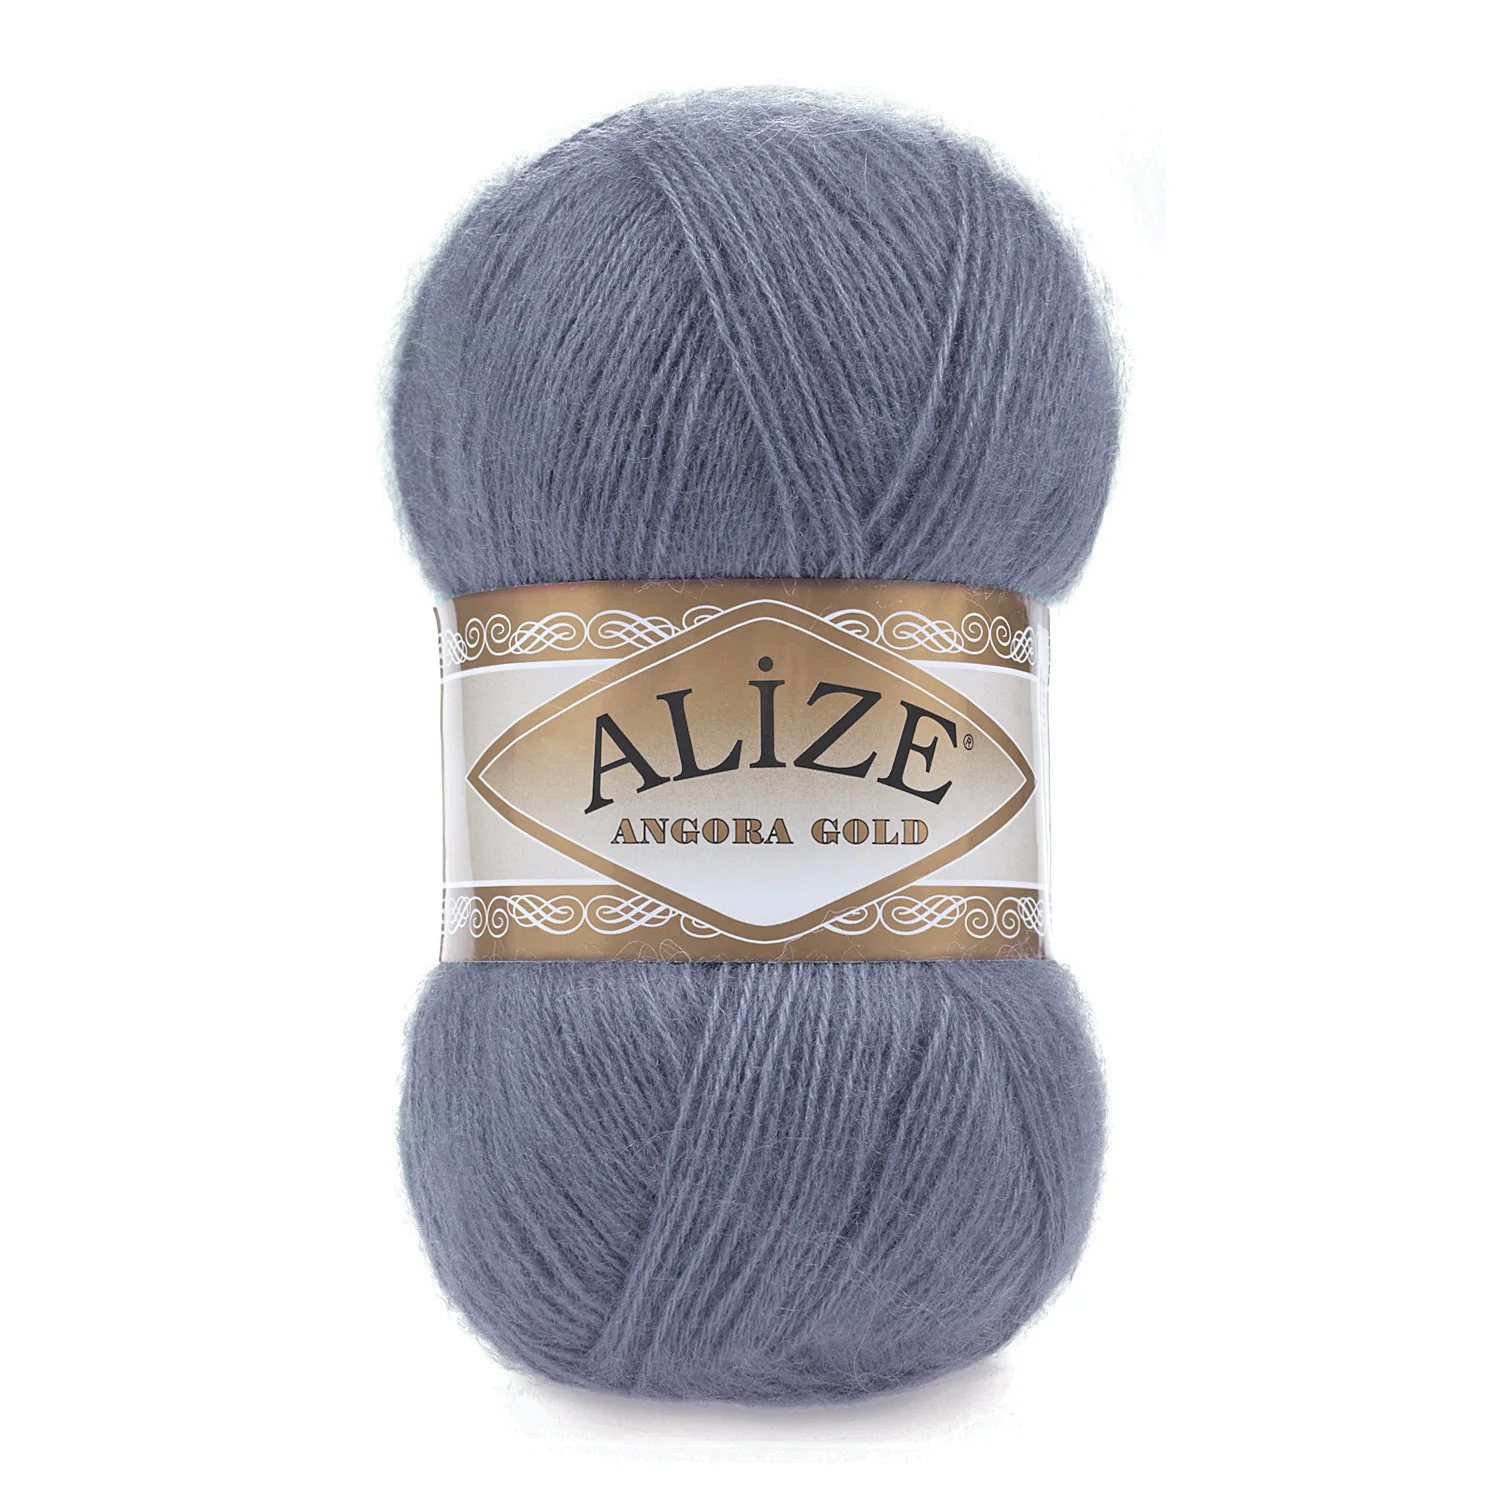 Alize Angora Gold Knitting Yarn, Usado para